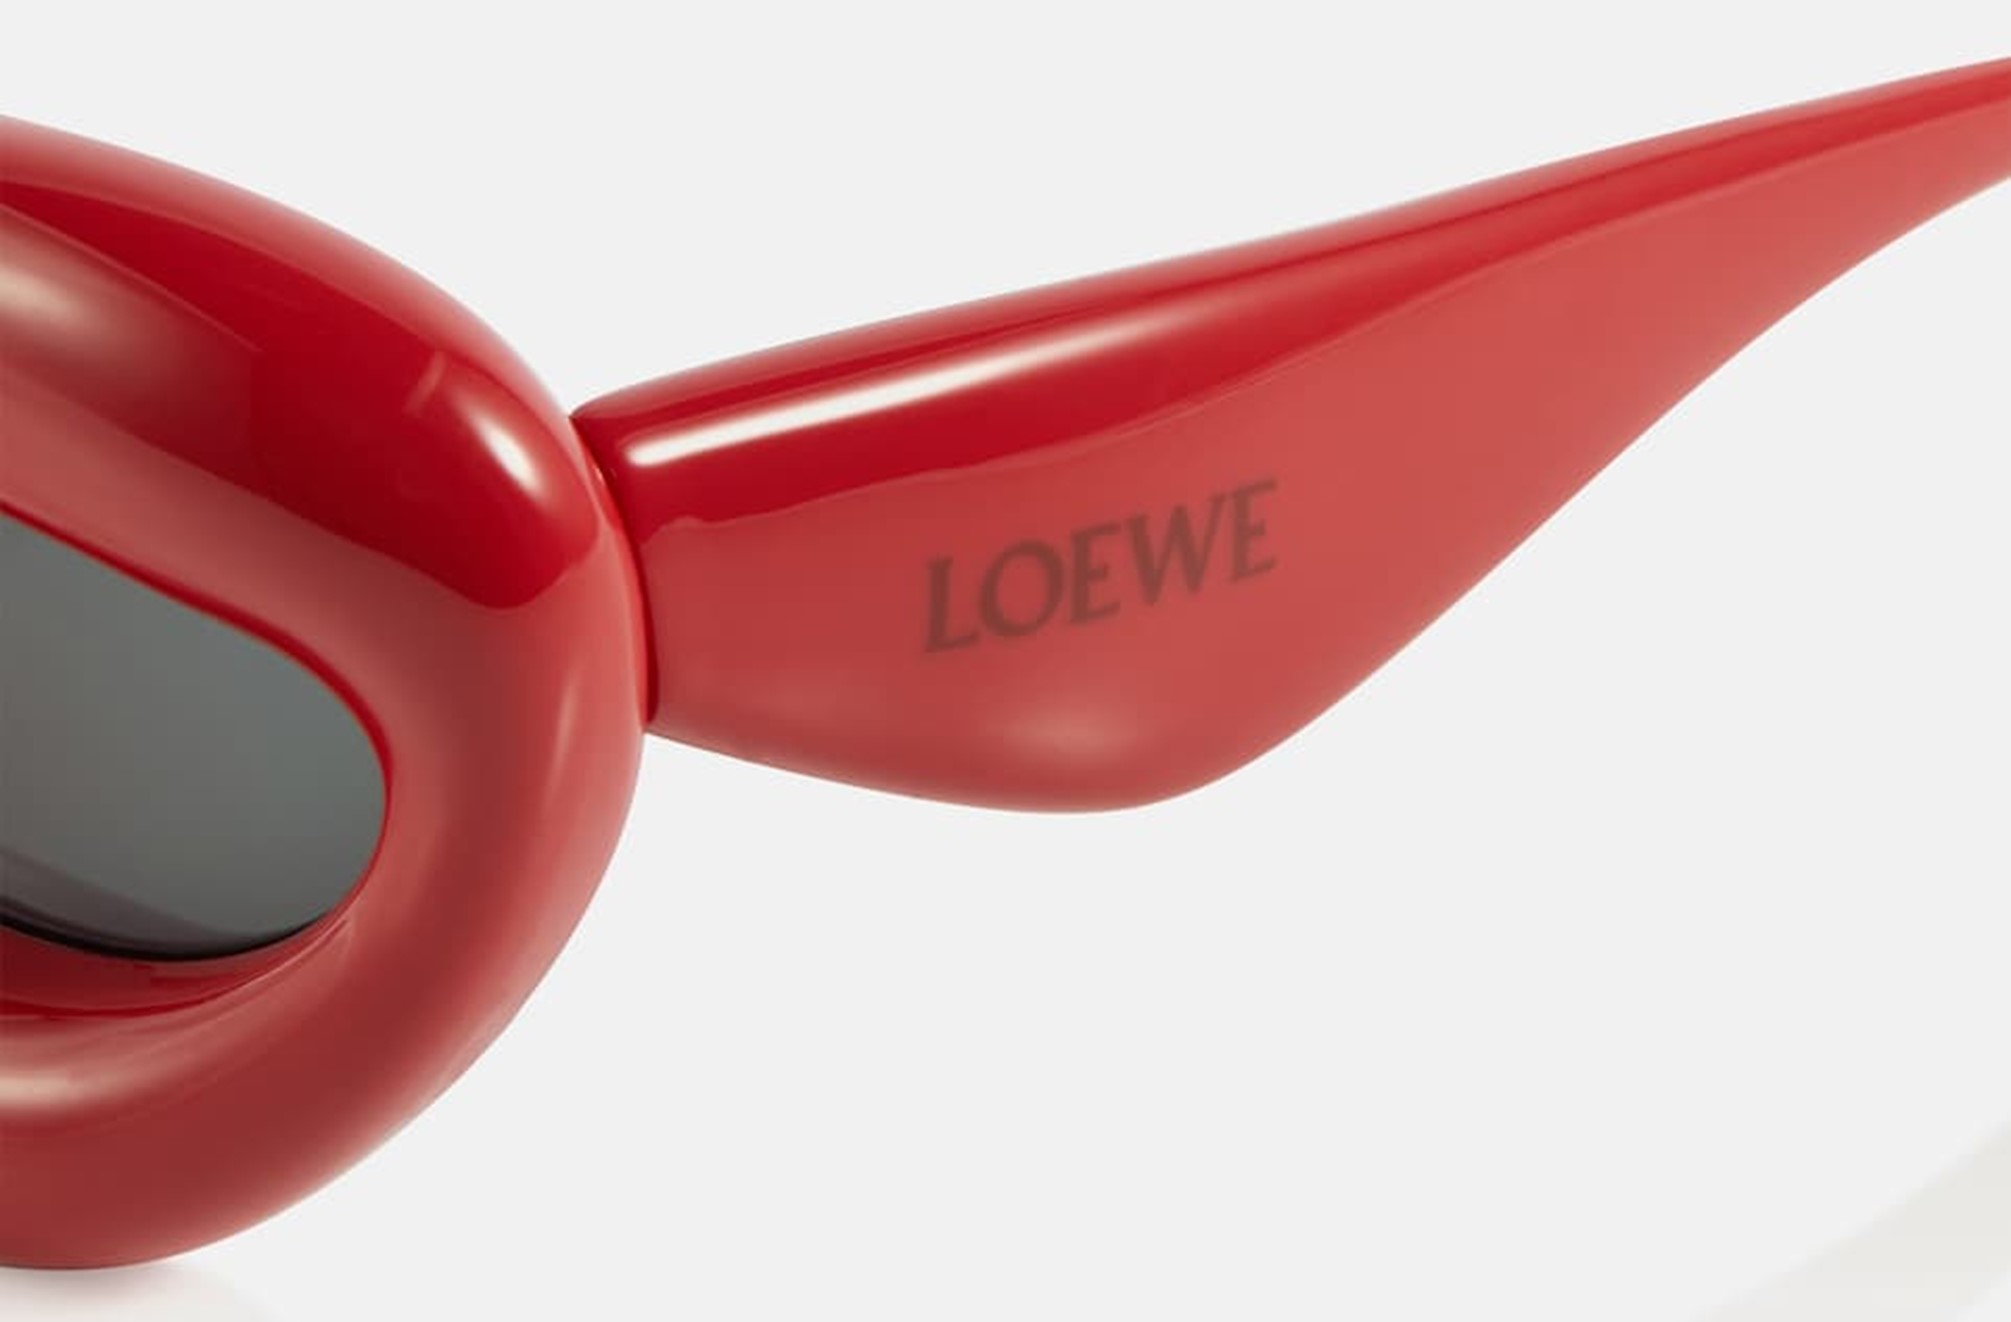 Inflated by Loewe 